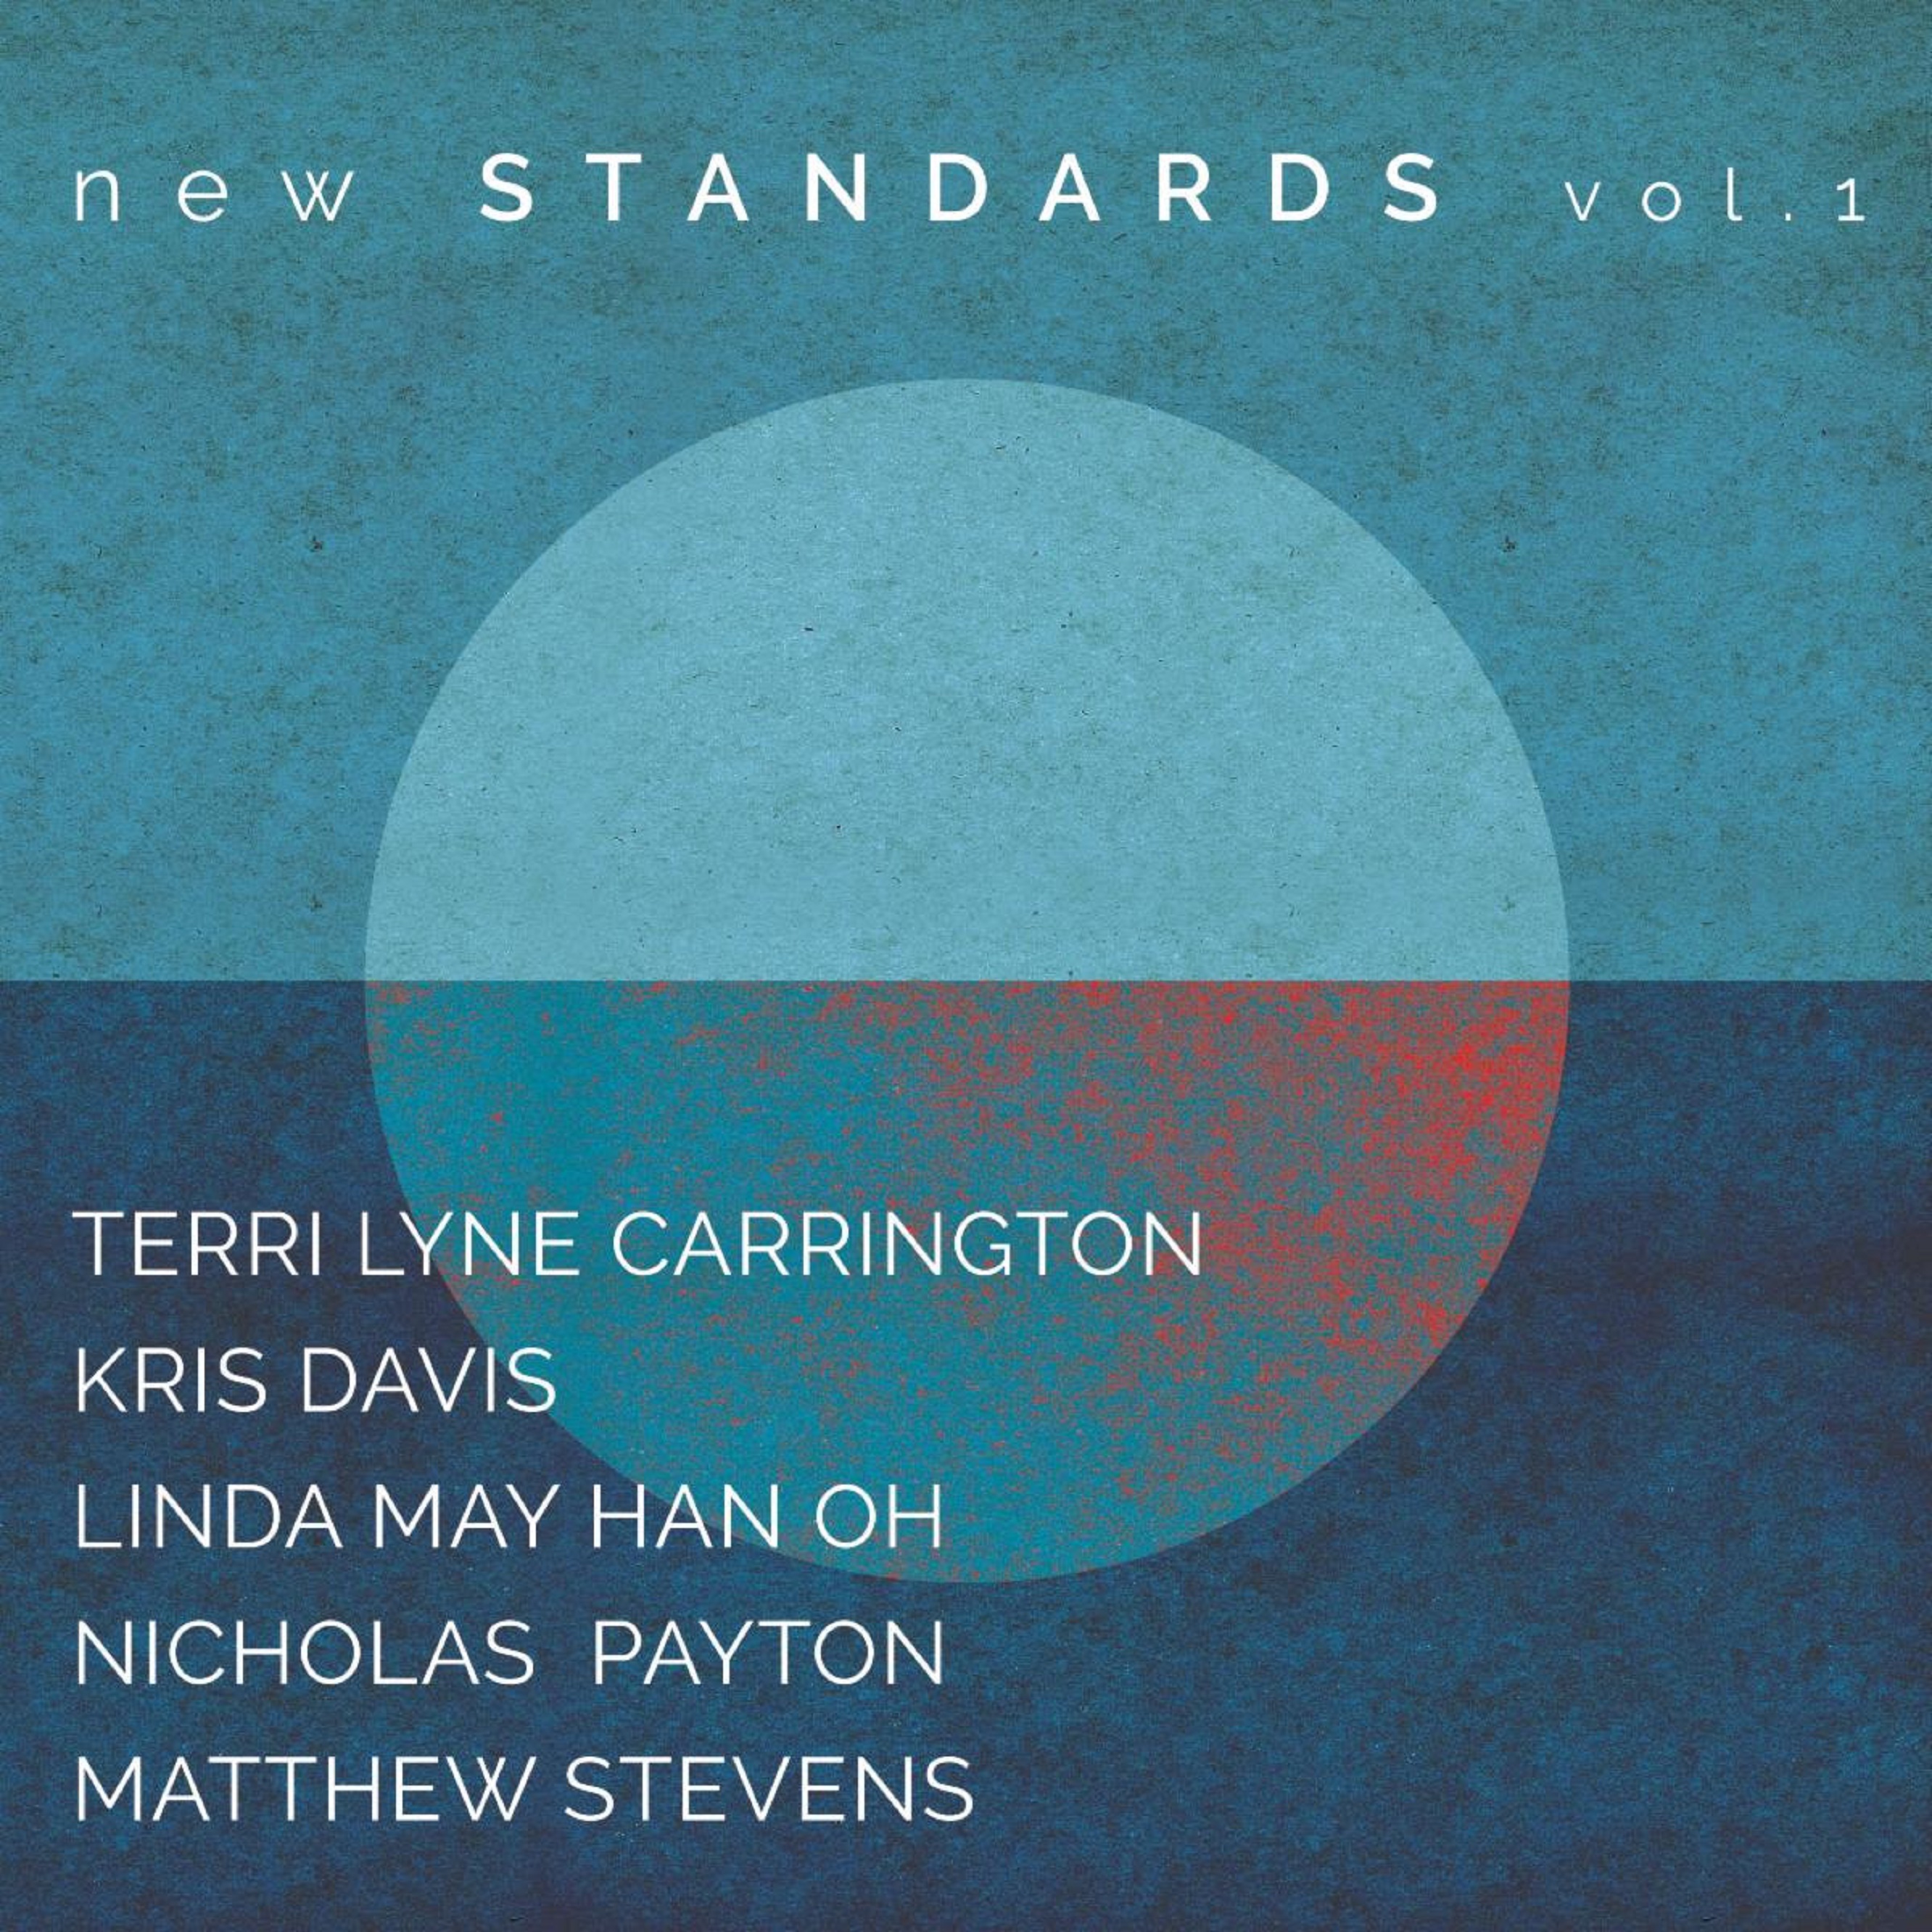 Terri Lyne Carrington Wins Best Jazz Instrumental Album for new STANDARDS Vol. 1